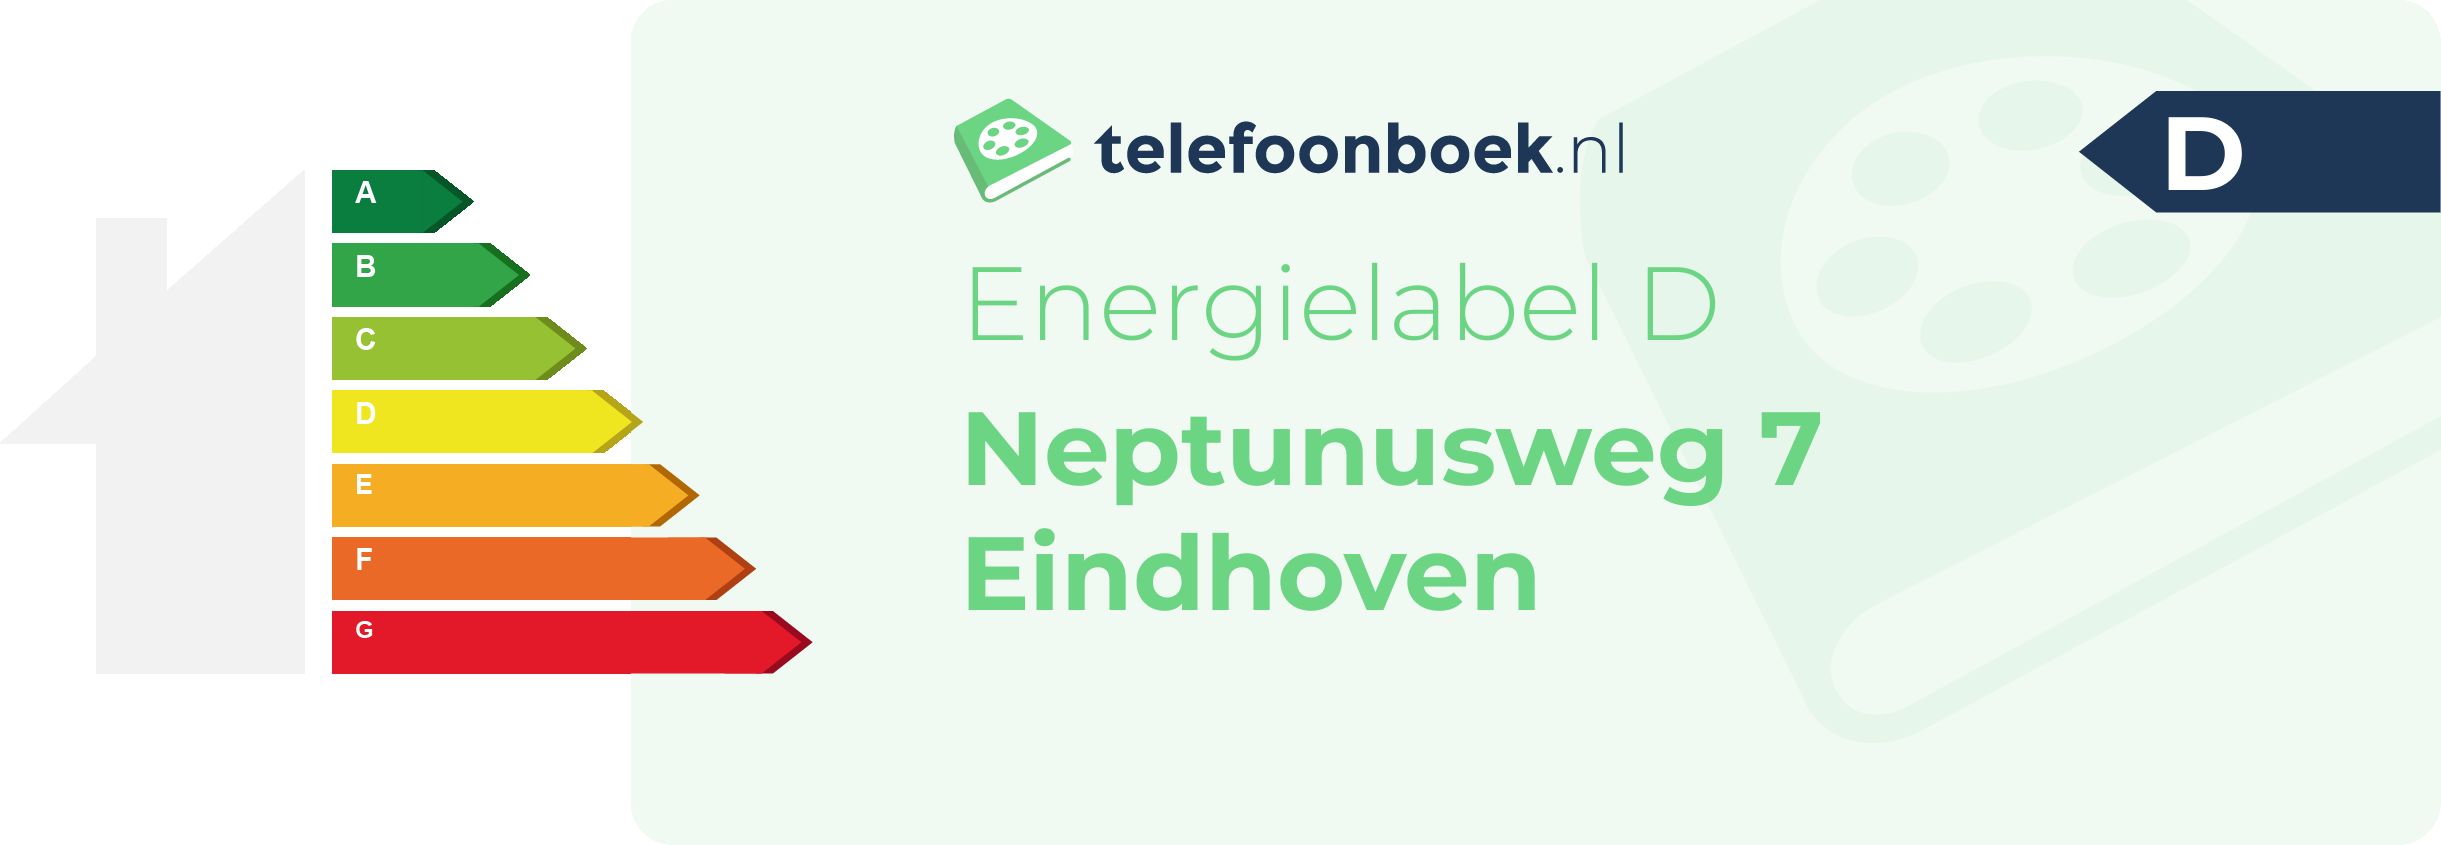 Energielabel Neptunusweg 7 Eindhoven